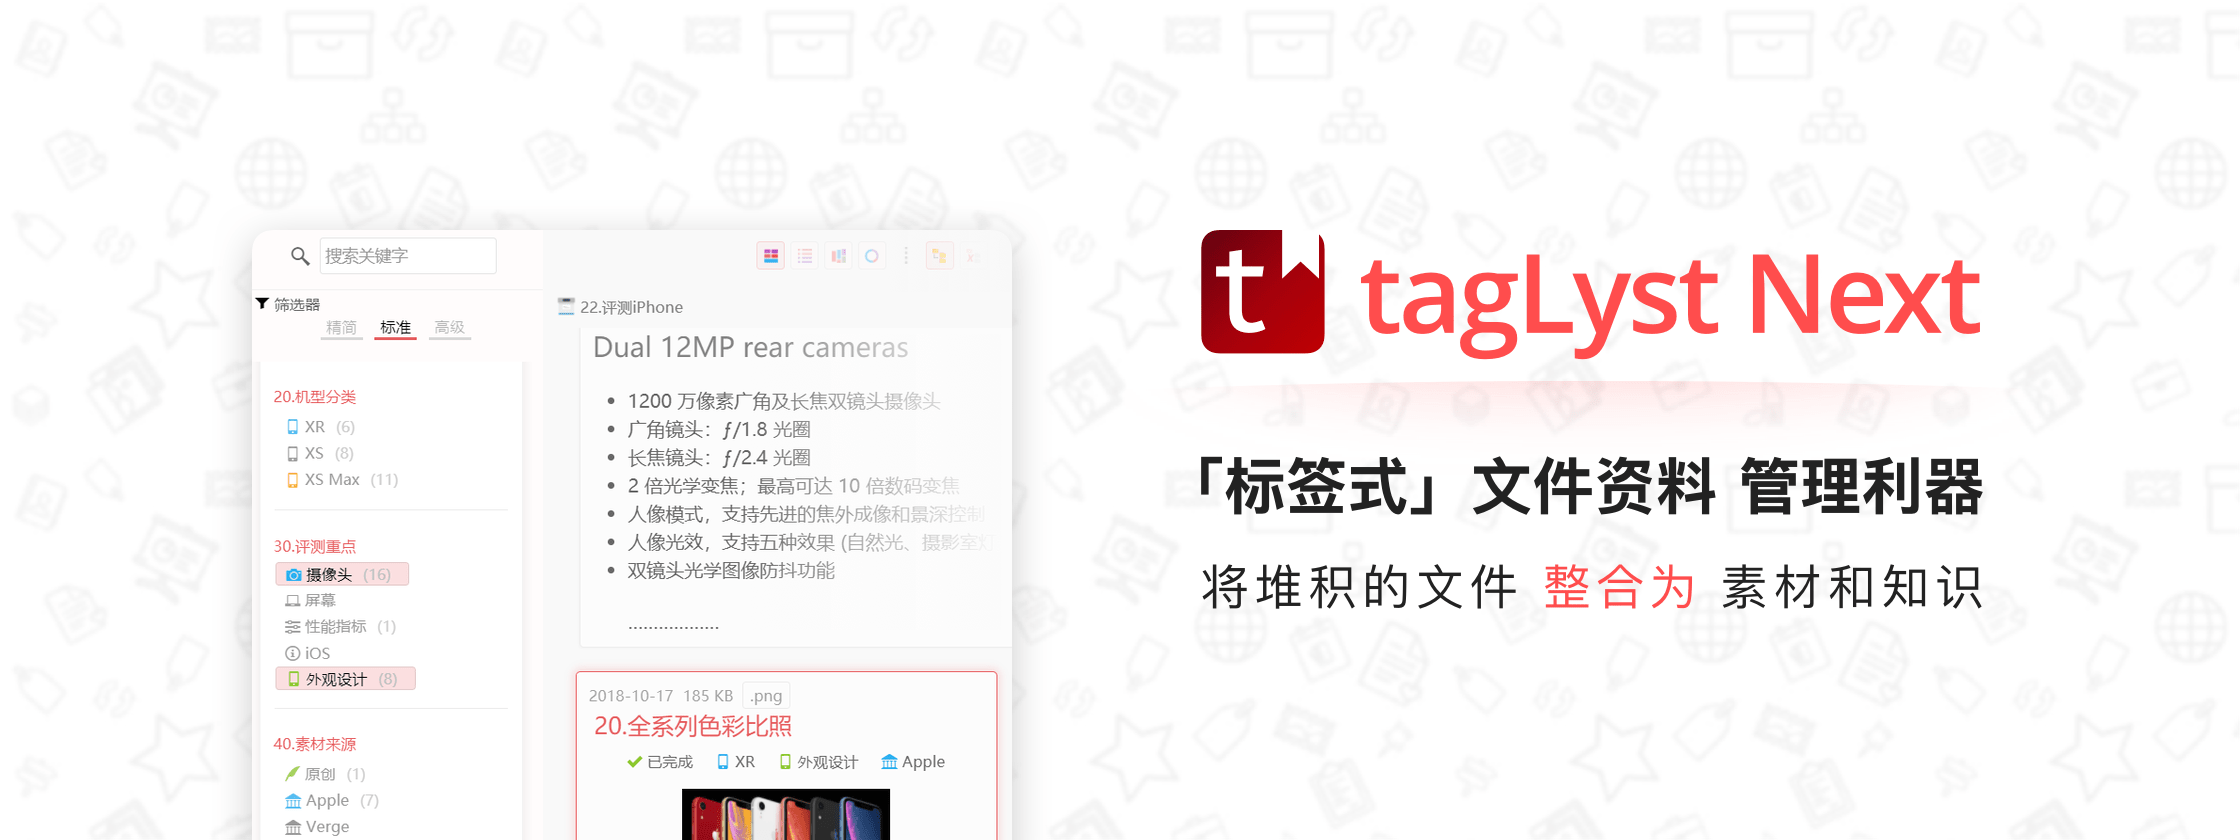 tagLyst Next: 标签式文件、资料管理利器